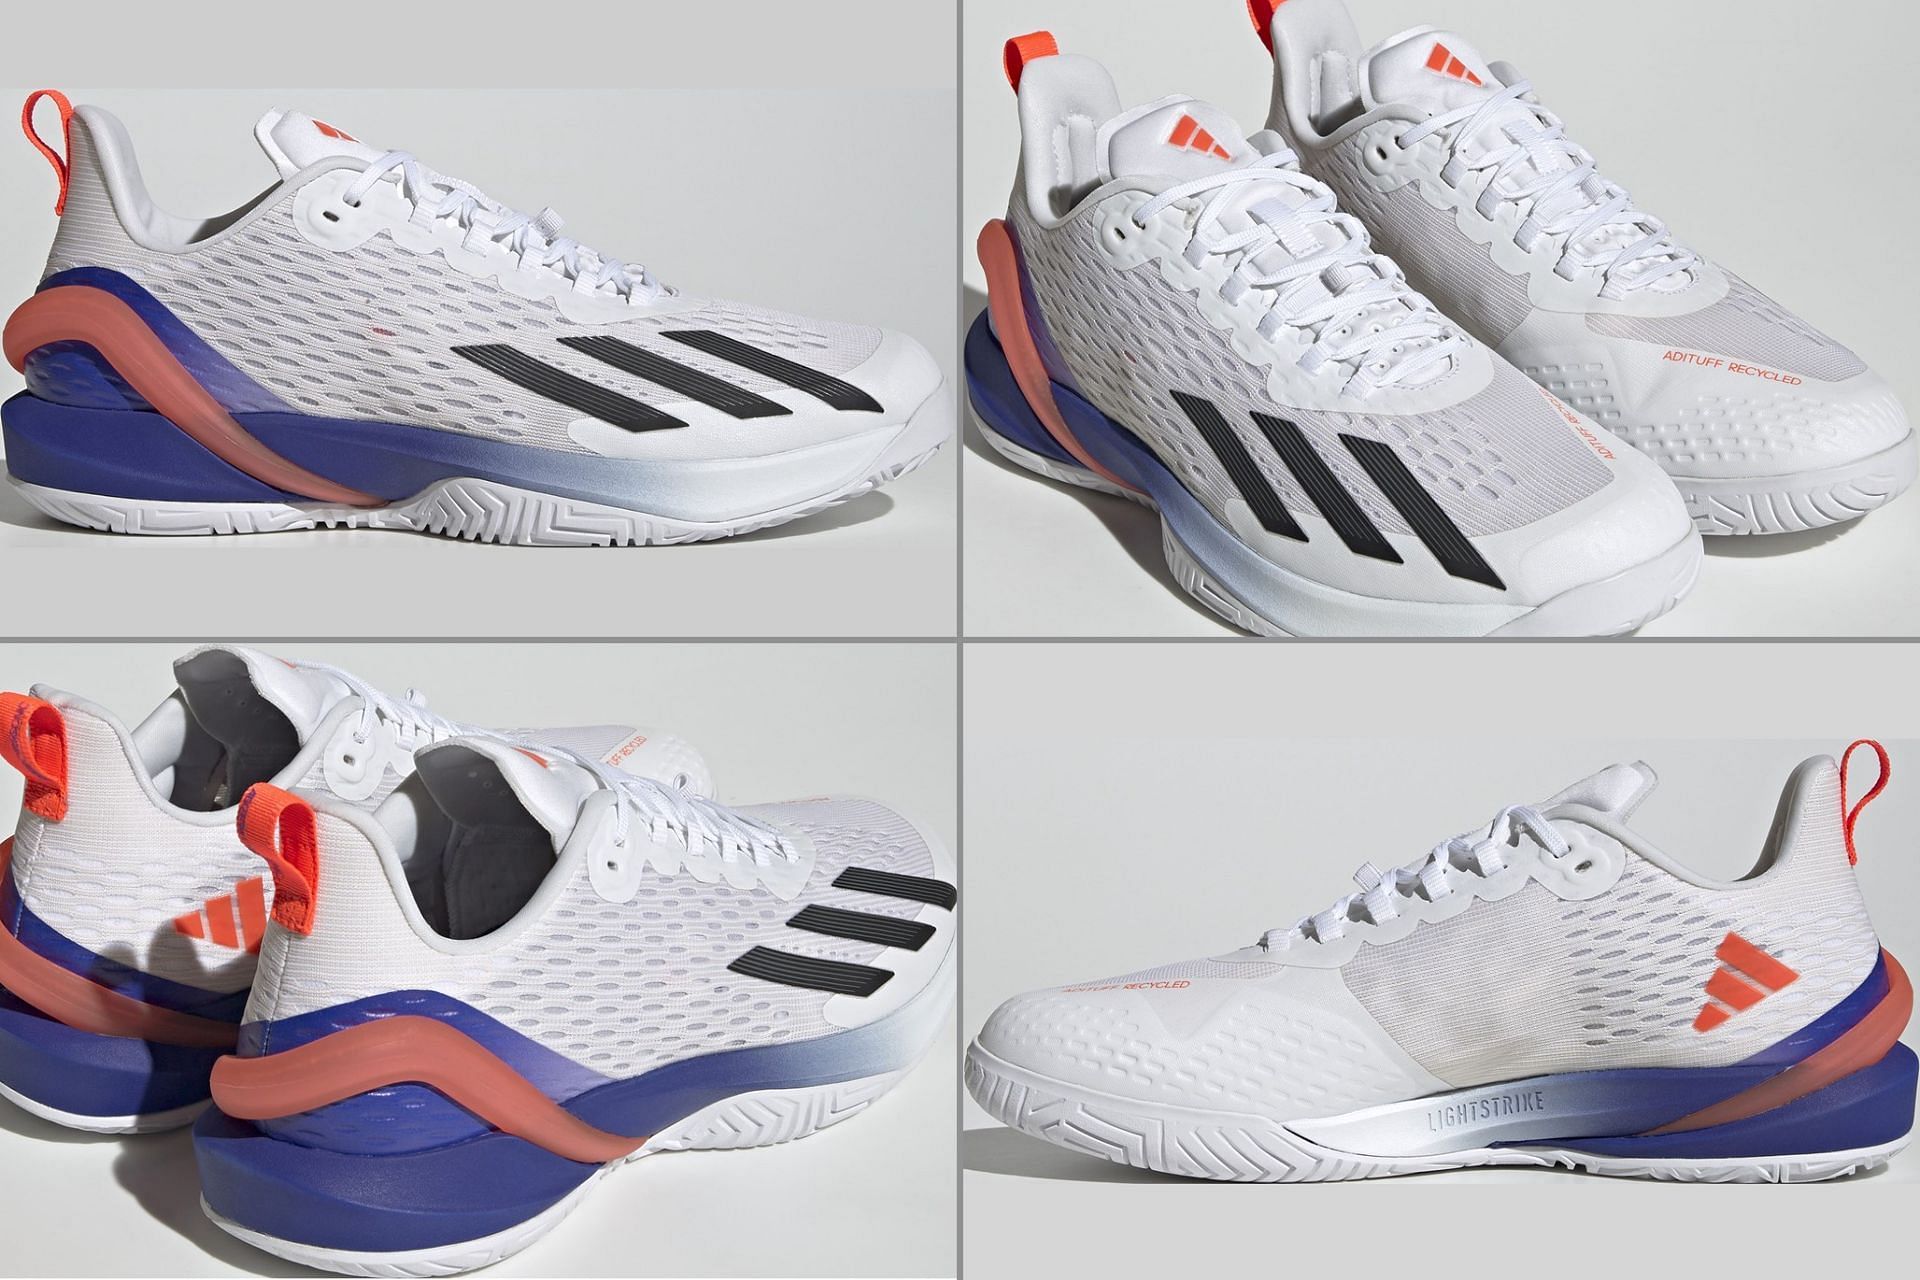 Upcoming Adizero Cybersonic shoe for men (Image via Sportskeeda)